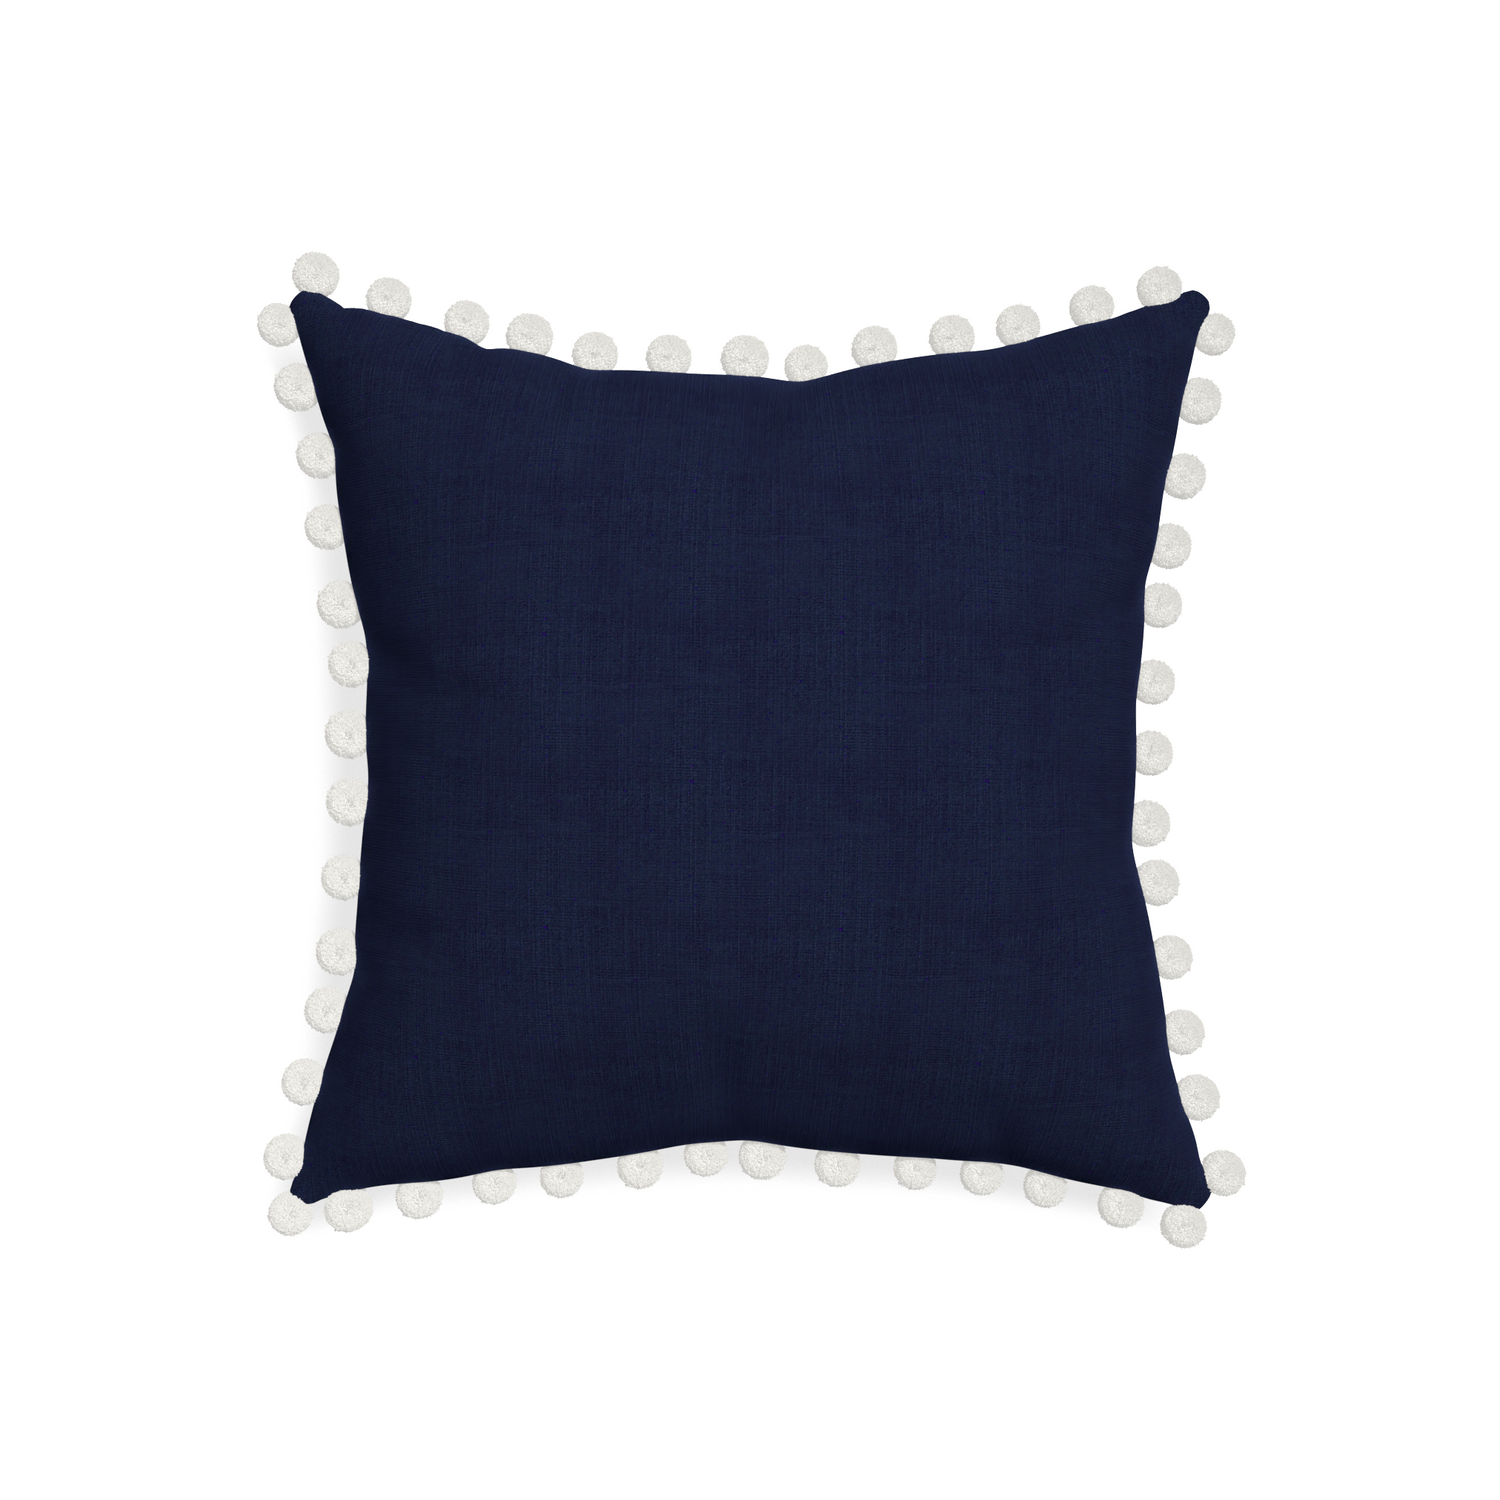 20-square midnight custom pillow with snow pom pom on white background